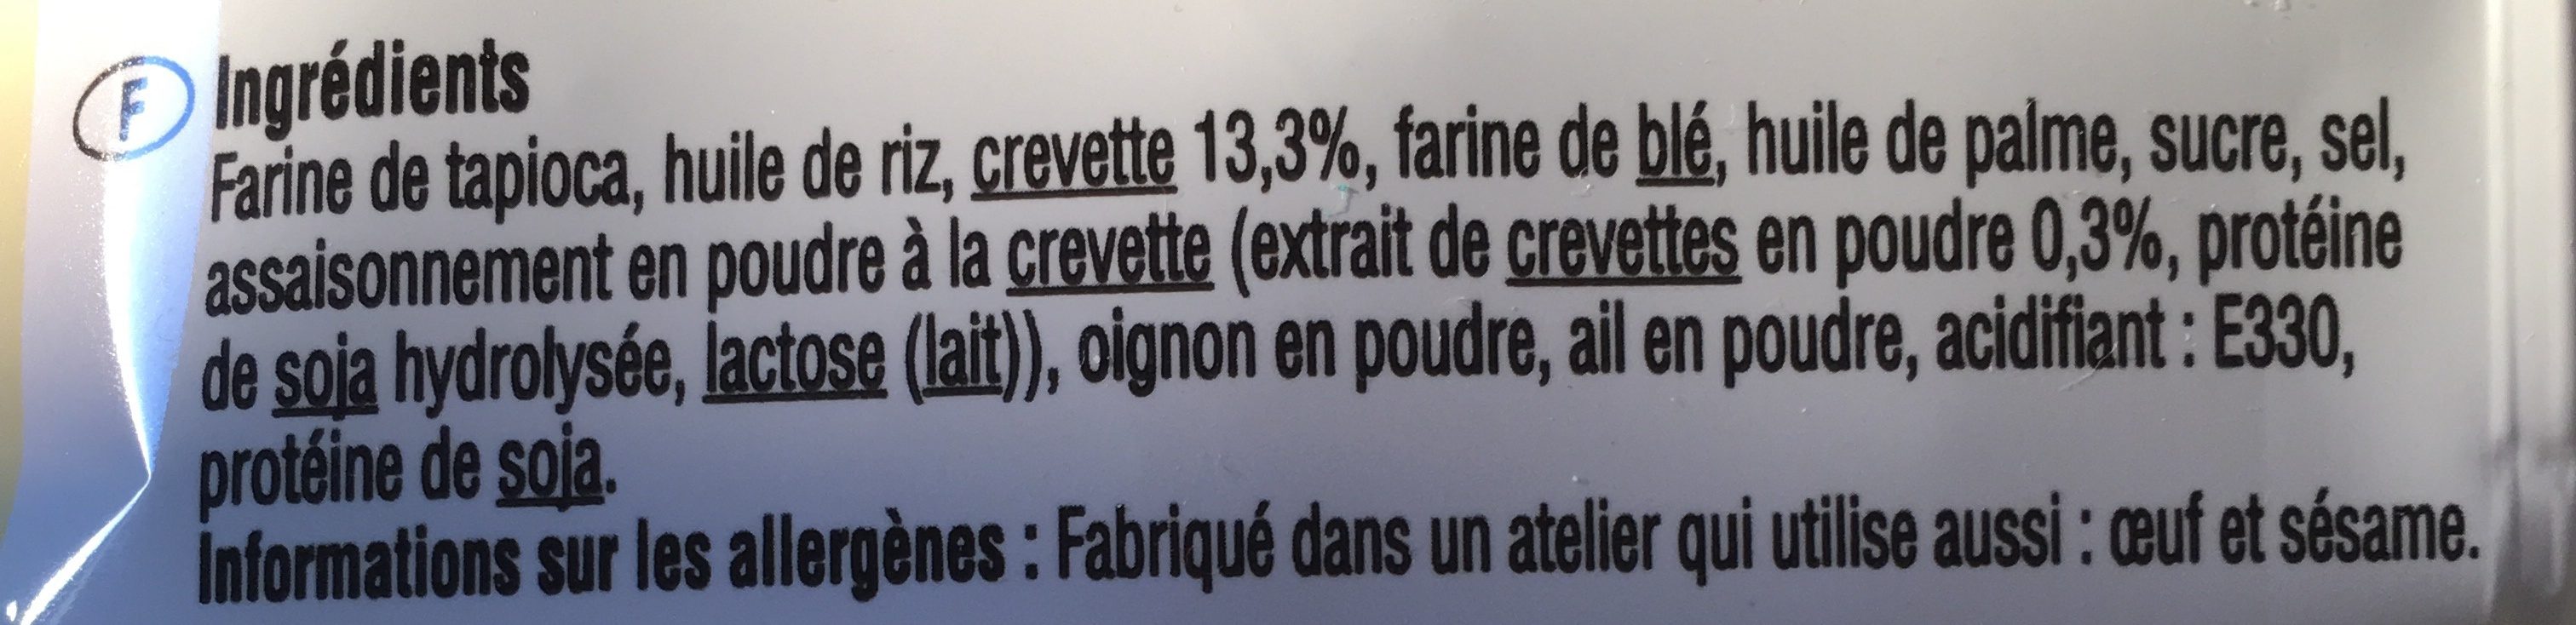 Chips de crevettes - Ingredients - fr